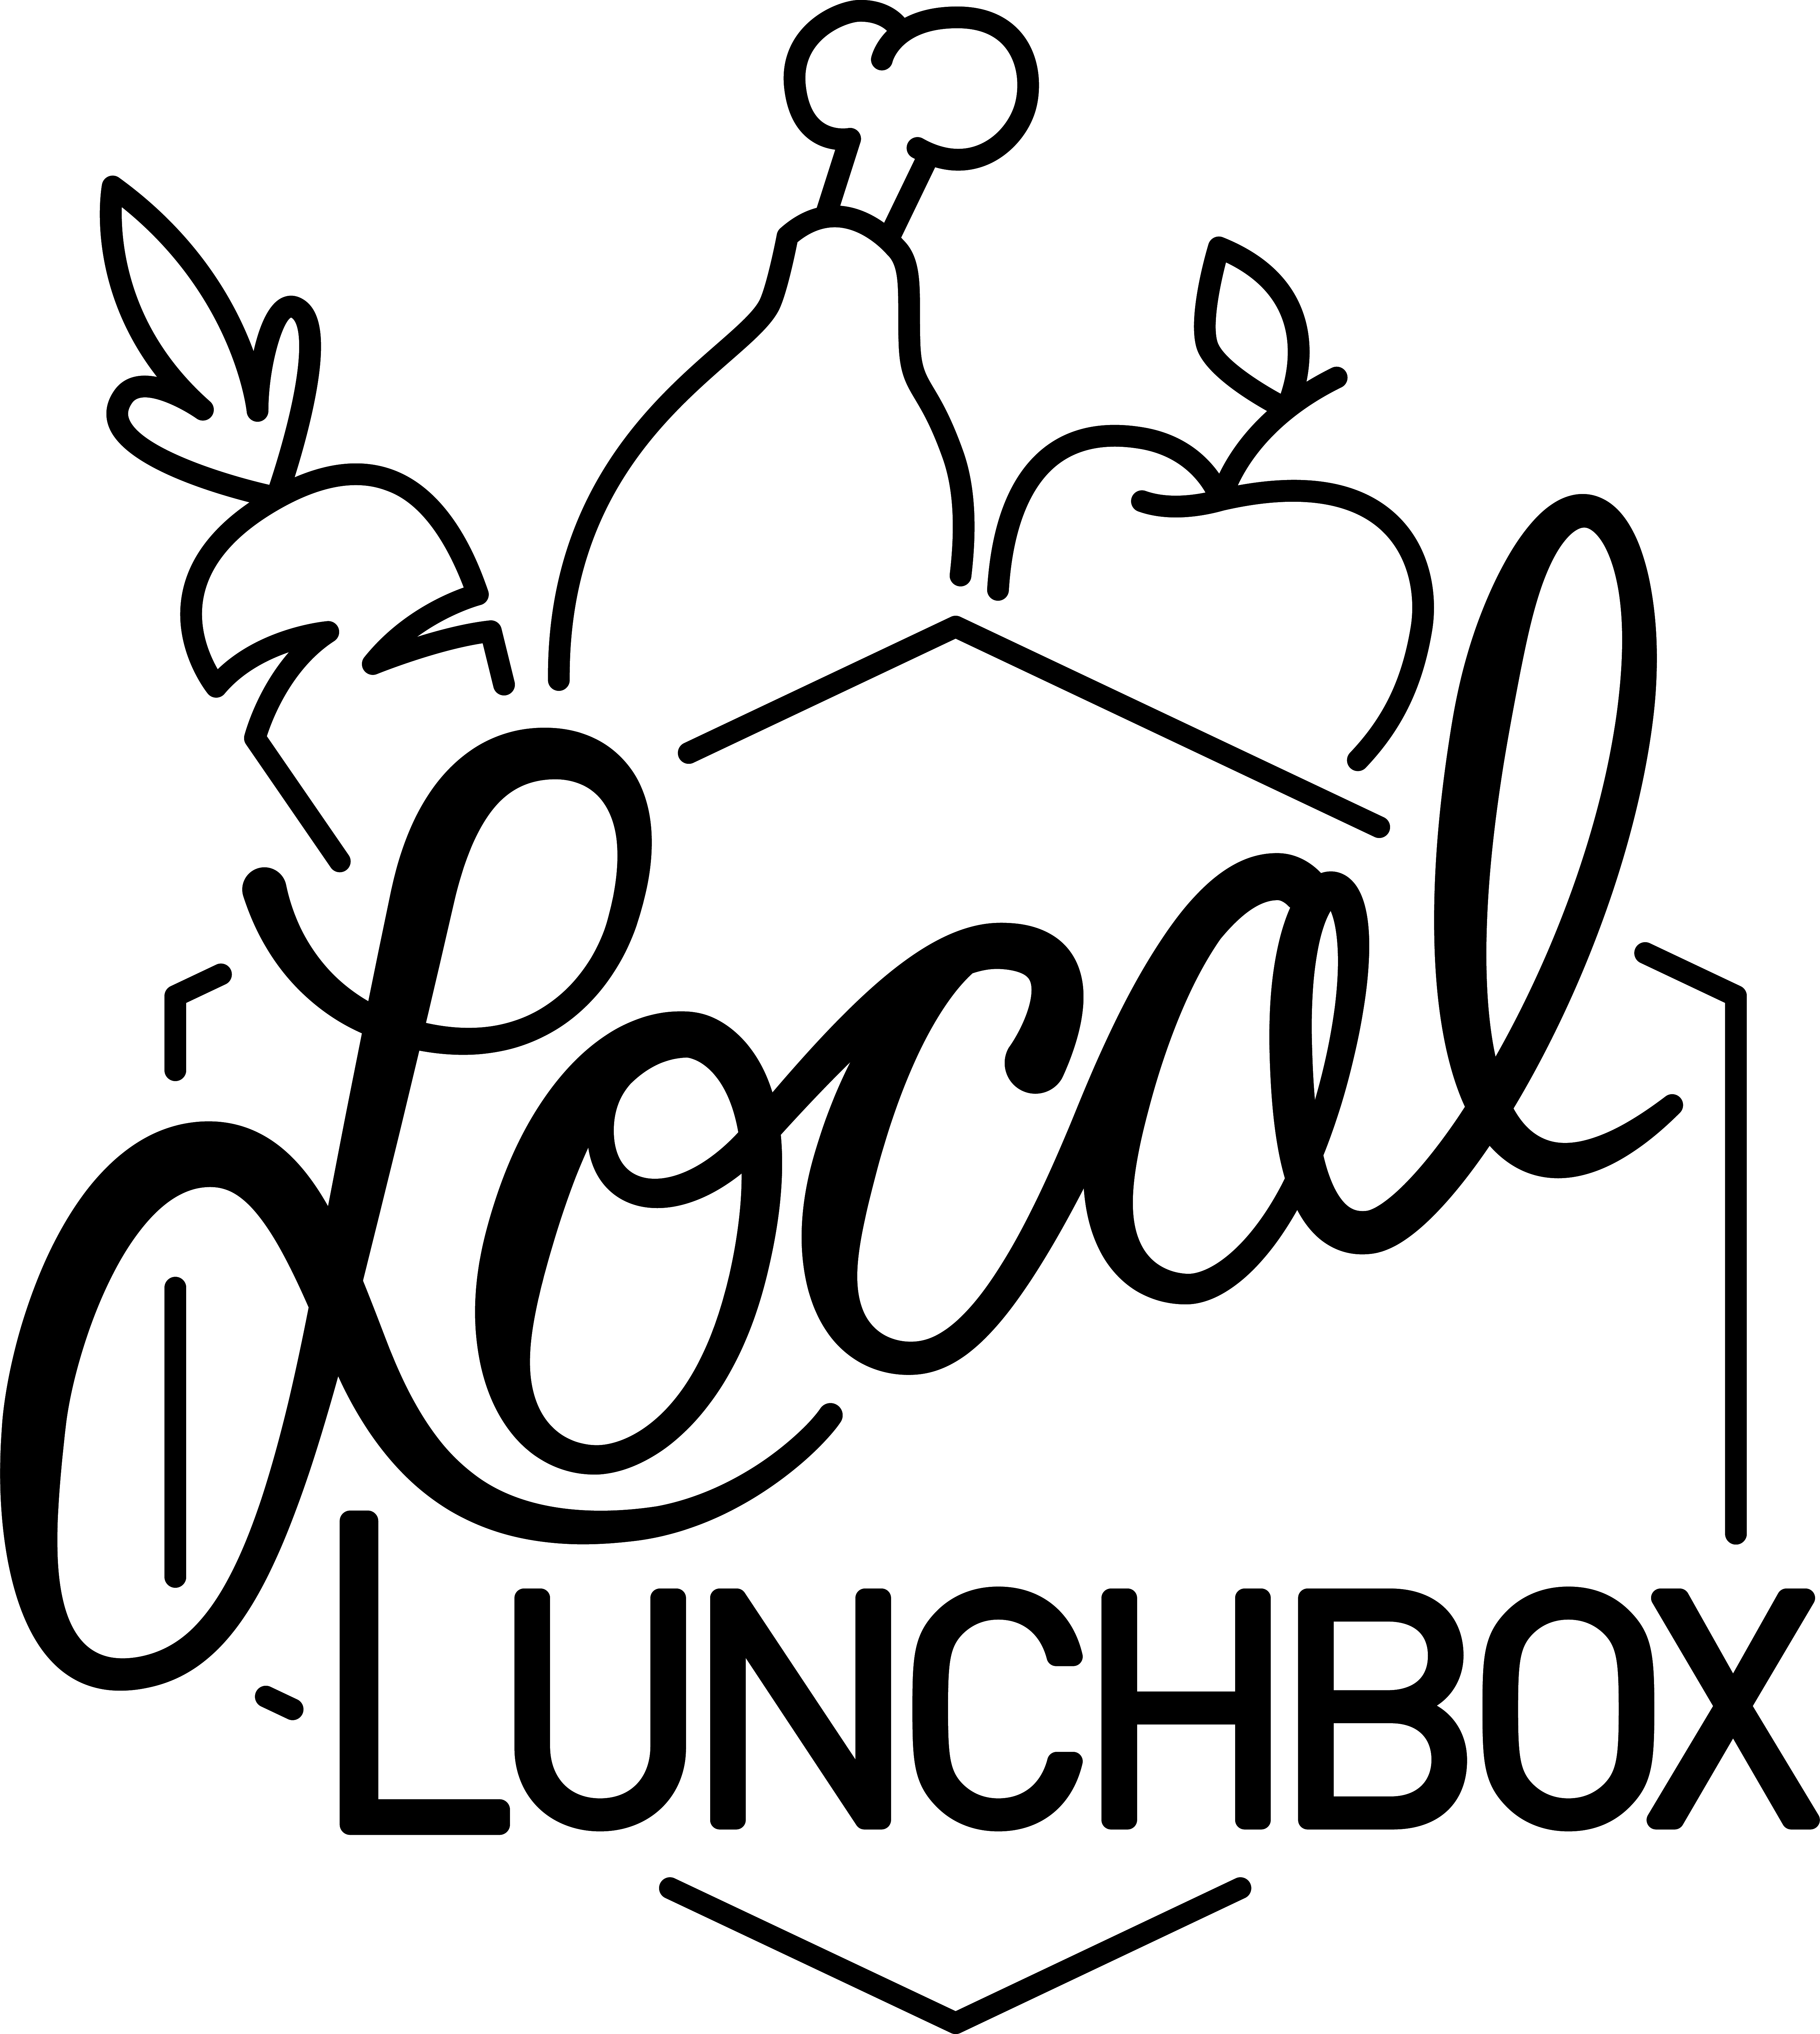 Local Lunchbox